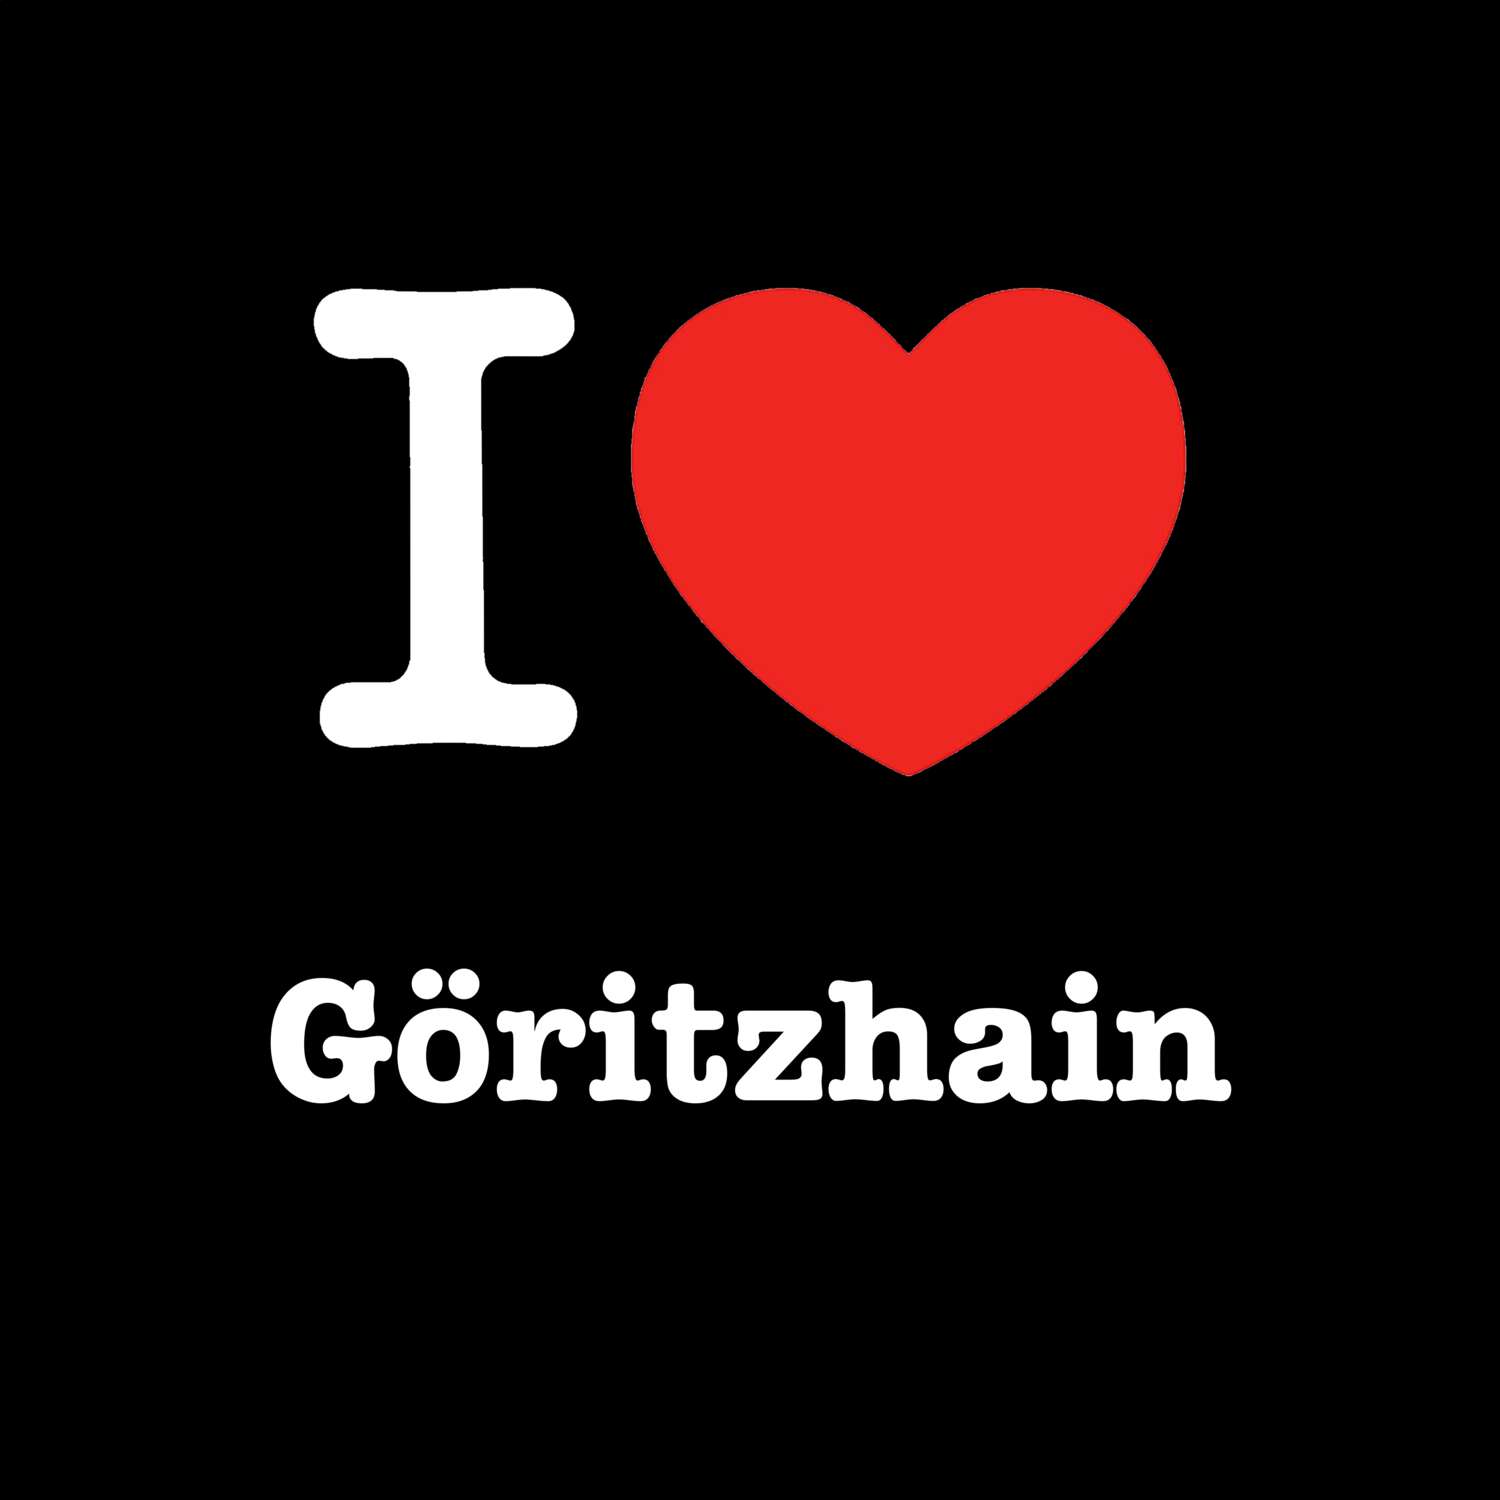 Göritzhain T-Shirt »I love«